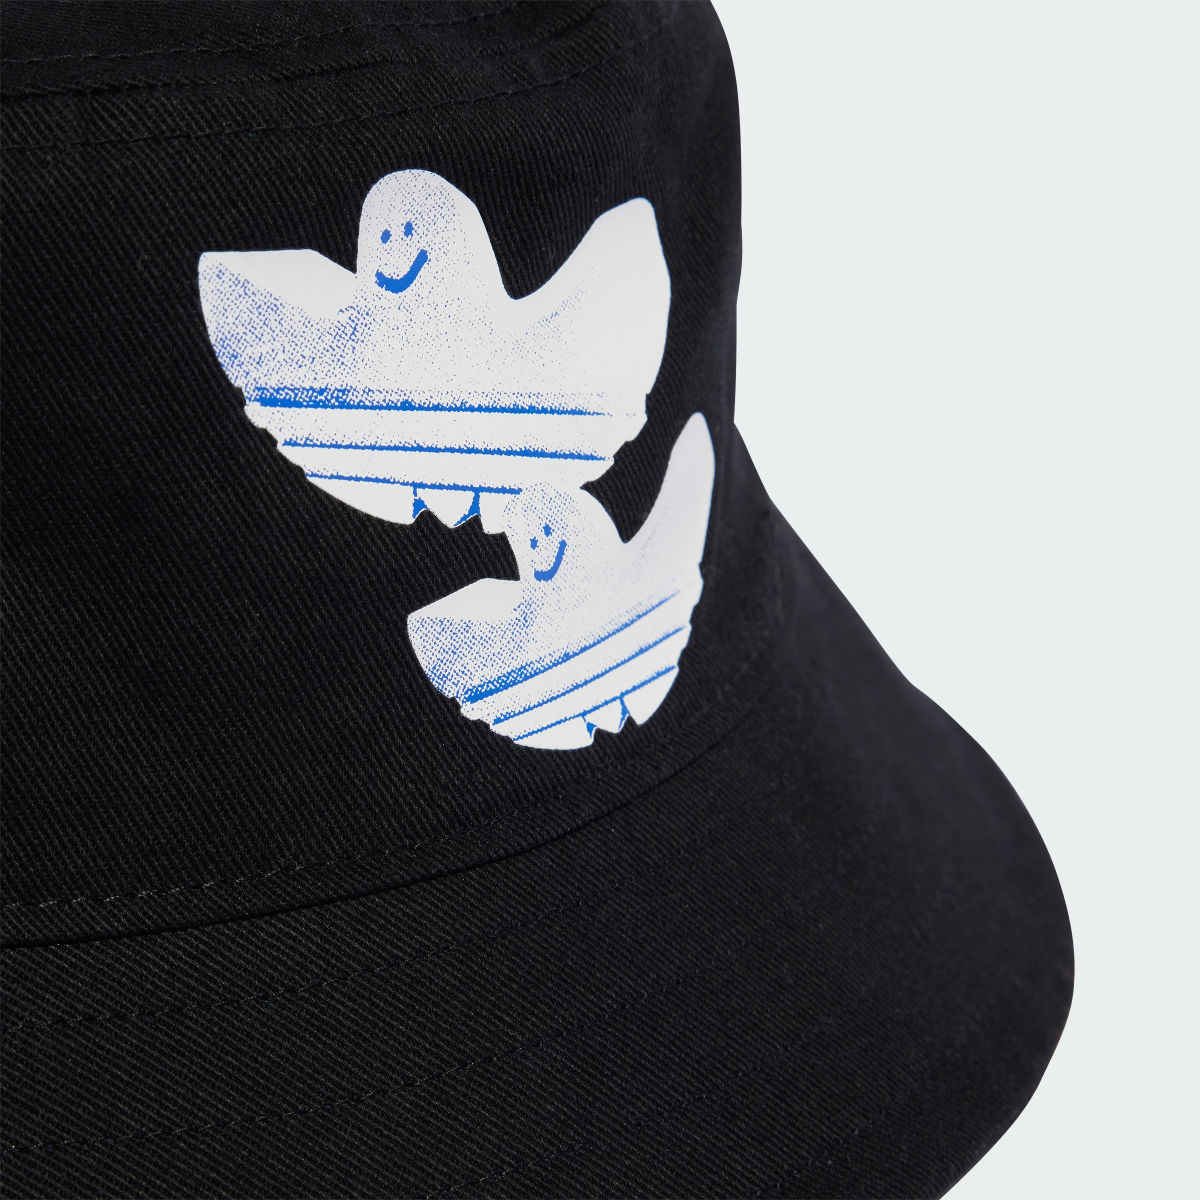 Adidas Originals x Mark Gonzales Bucket Hat. 5